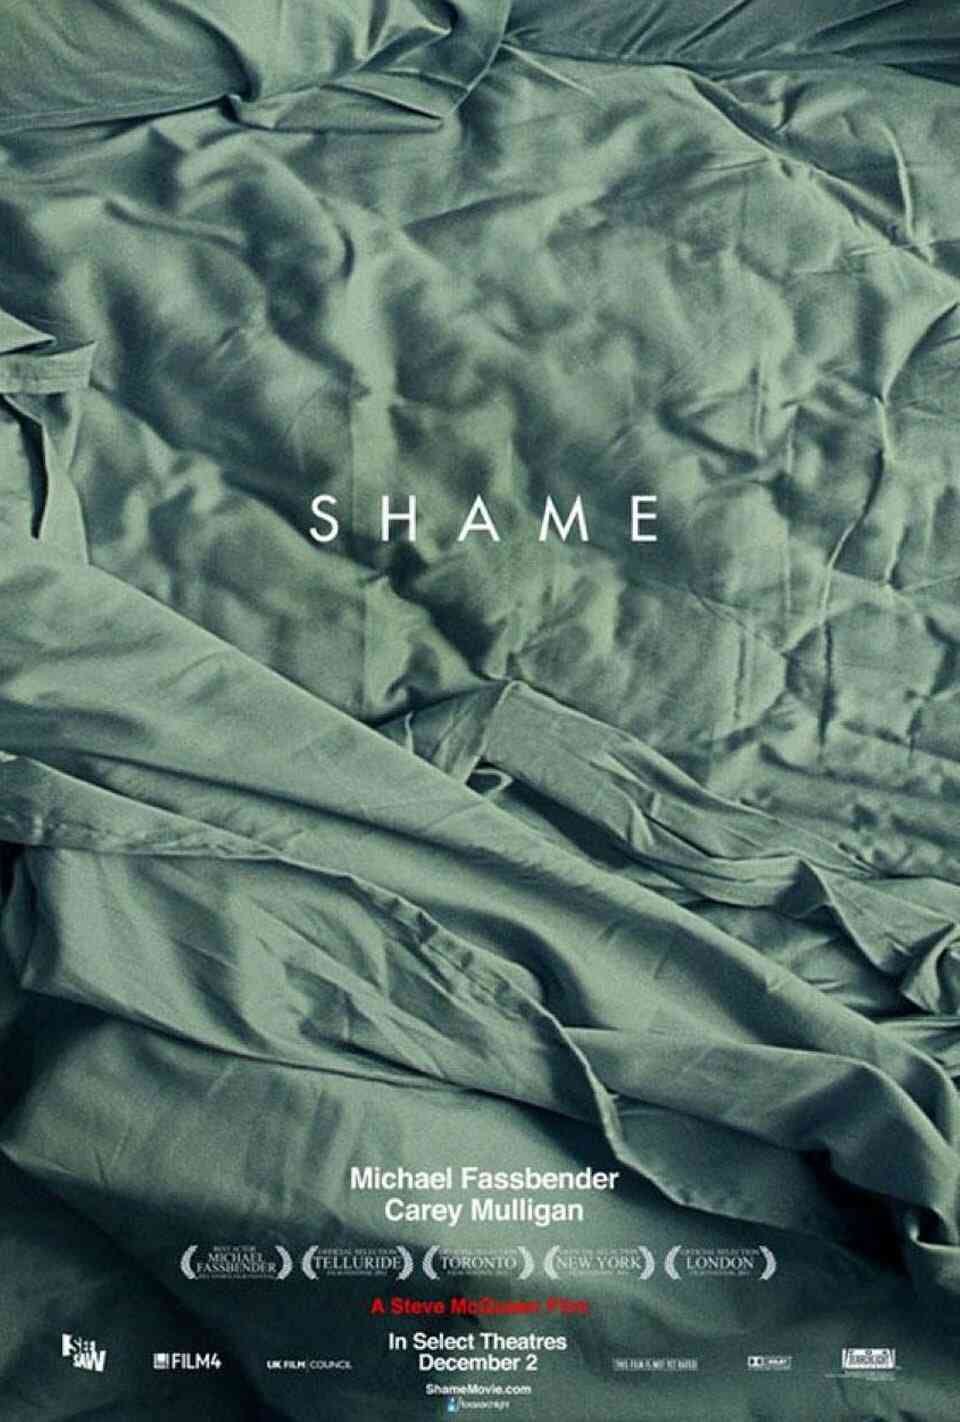 Read Shame screenplay (poster)